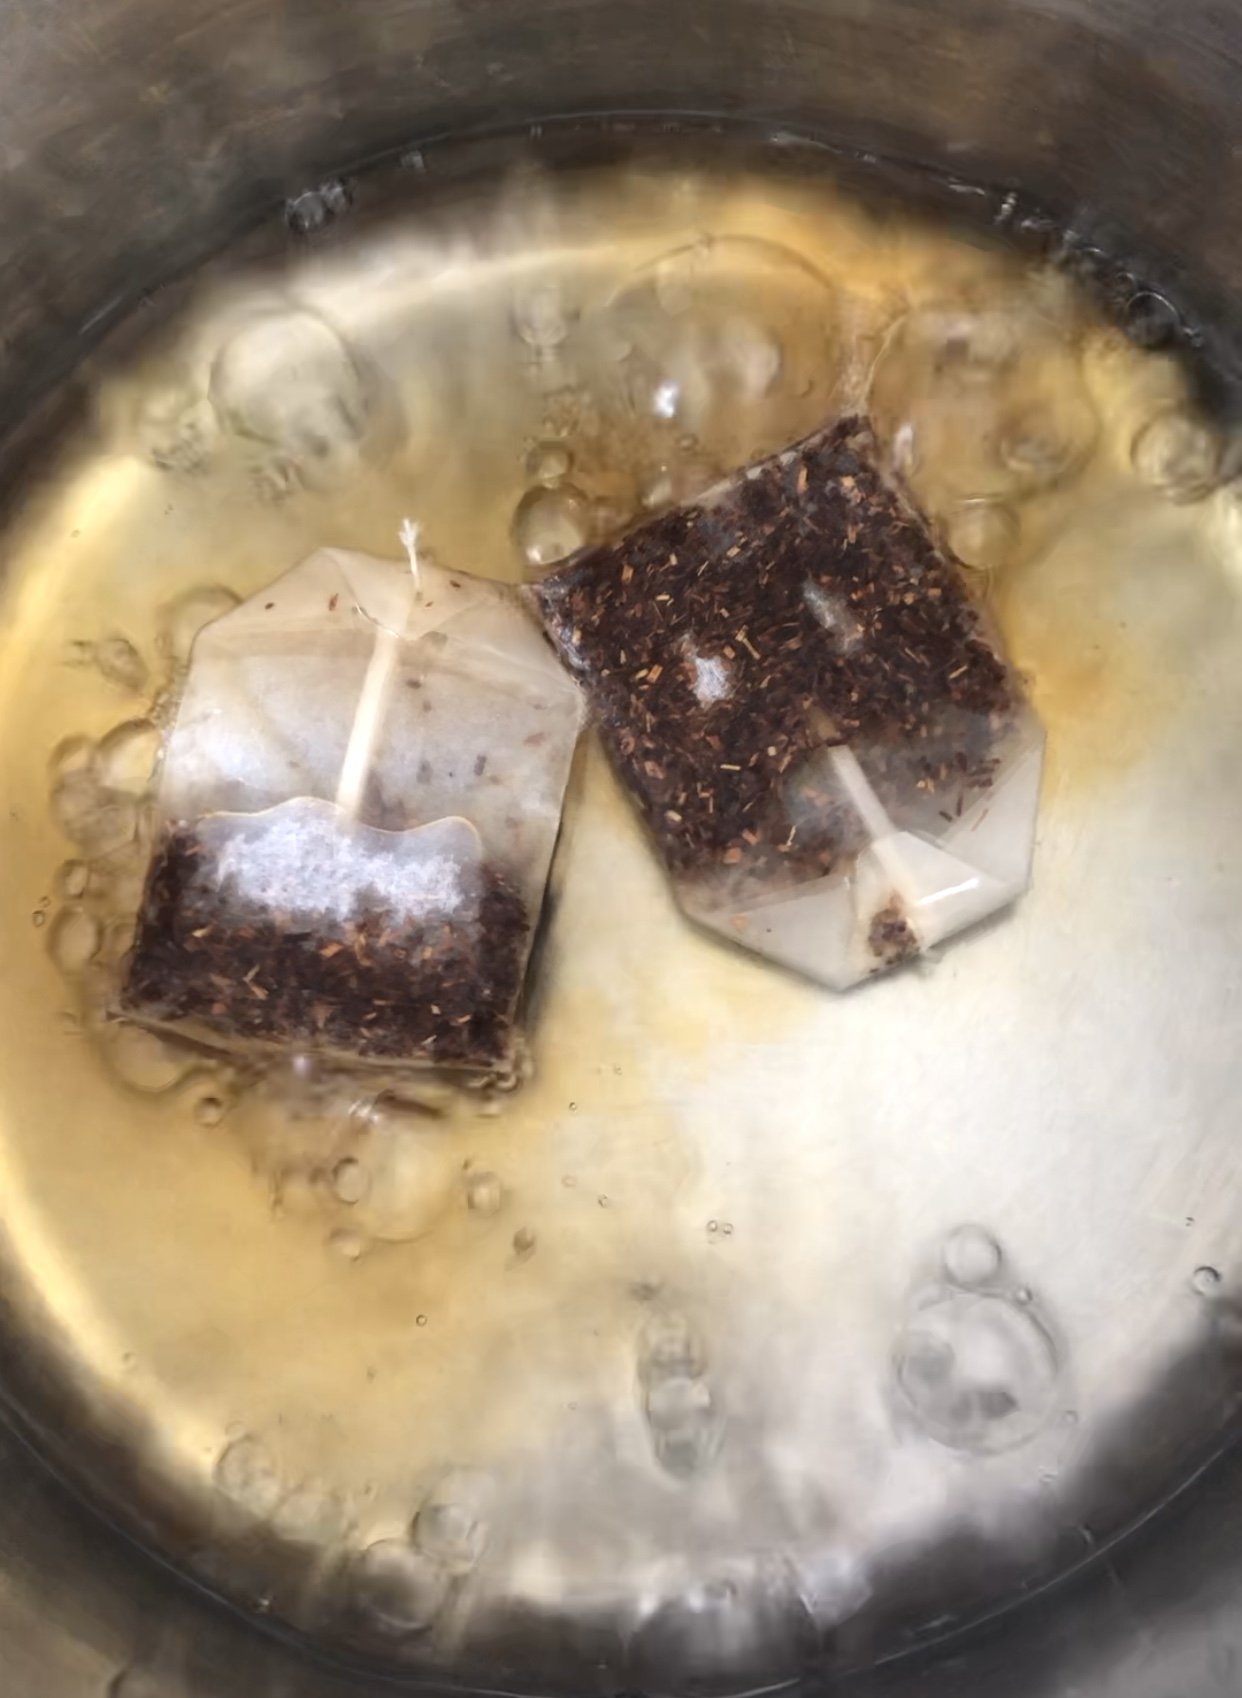 Iced Chai Tea Latte - Vegetarian Mamma